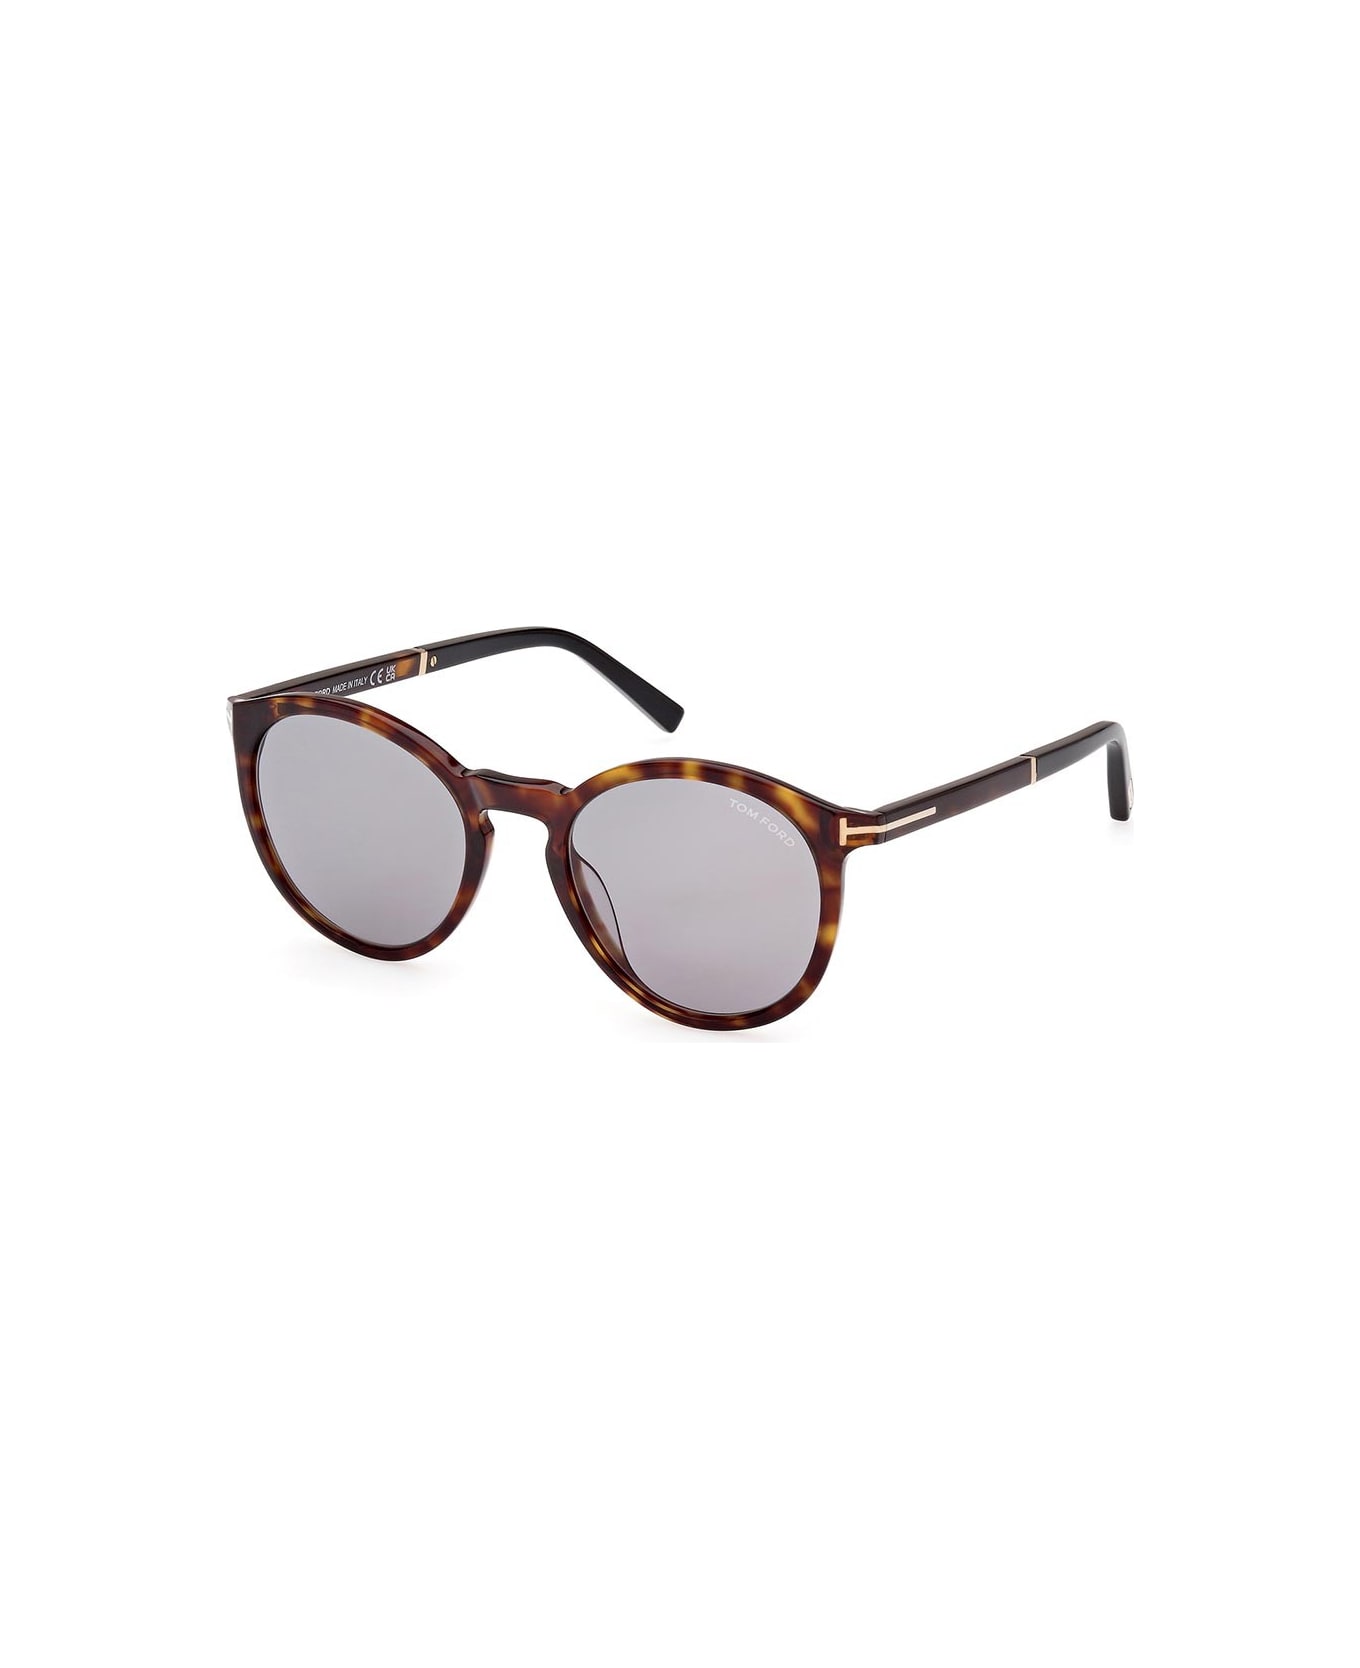 Tom Ford Eyewear Sunglasses - Marrone/Grigio サングラス